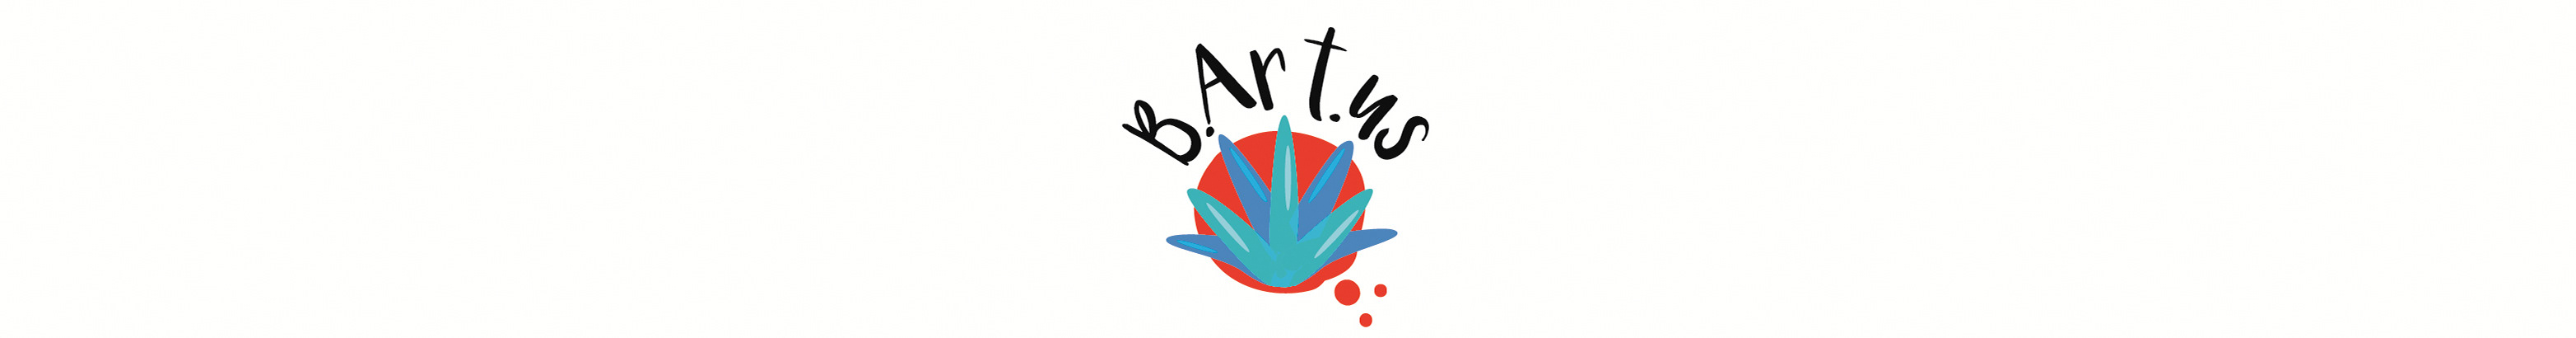 Bárbara Artus's profile banner